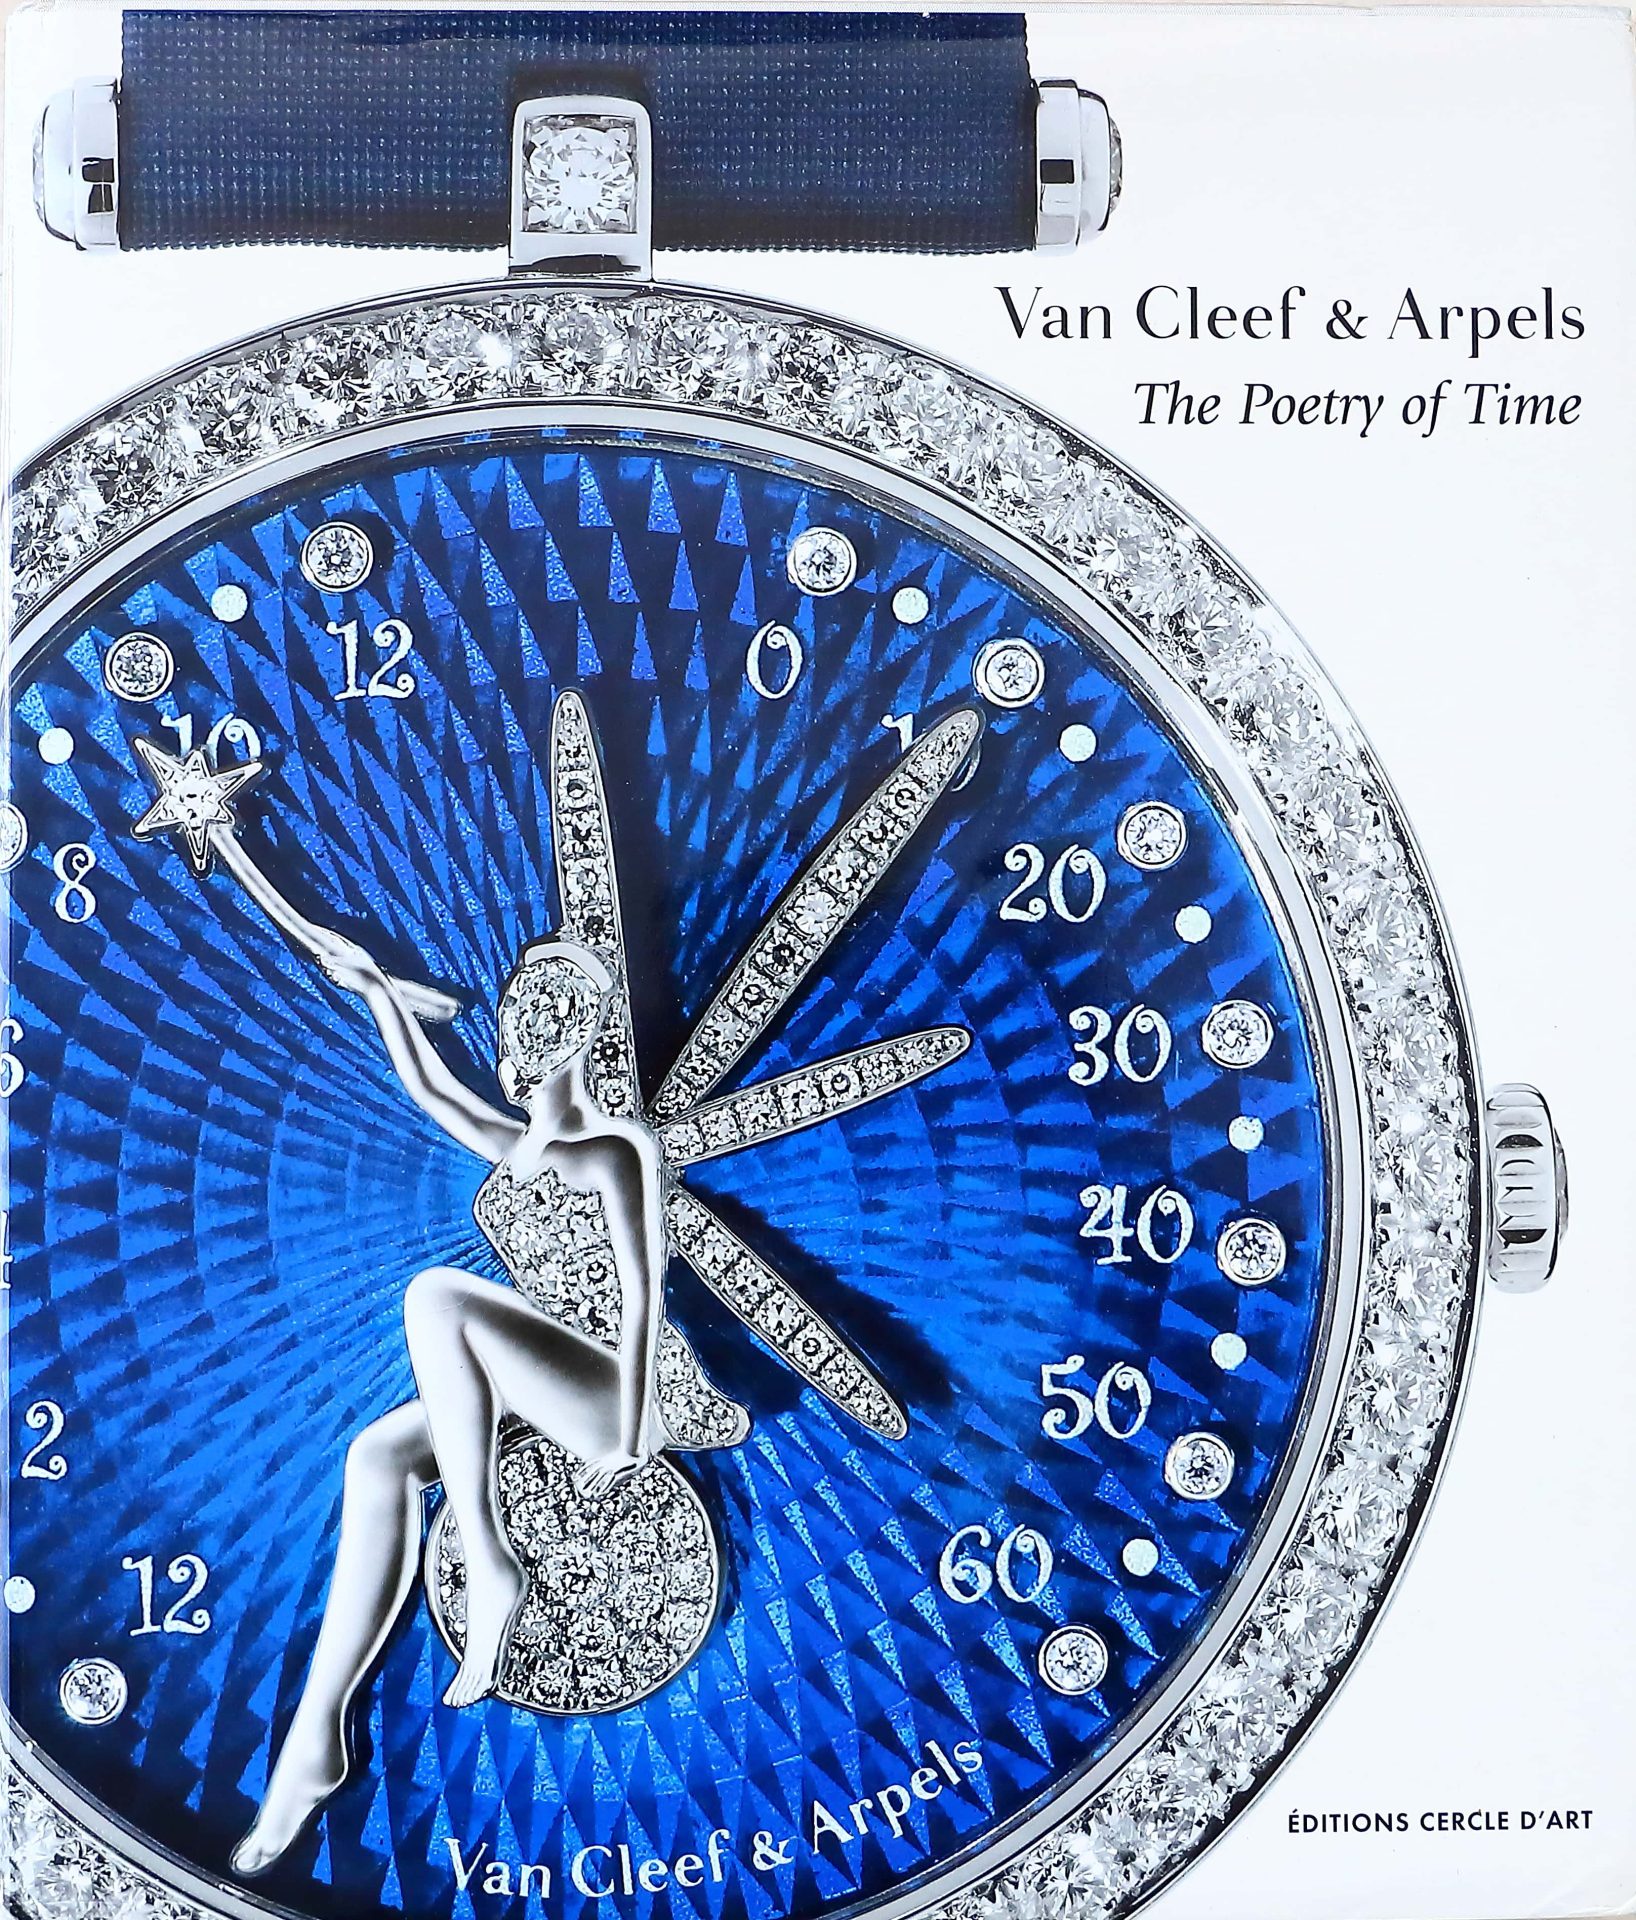 Van Cleef & Arpels The Poetry of Time Book - HorologyBooks.com